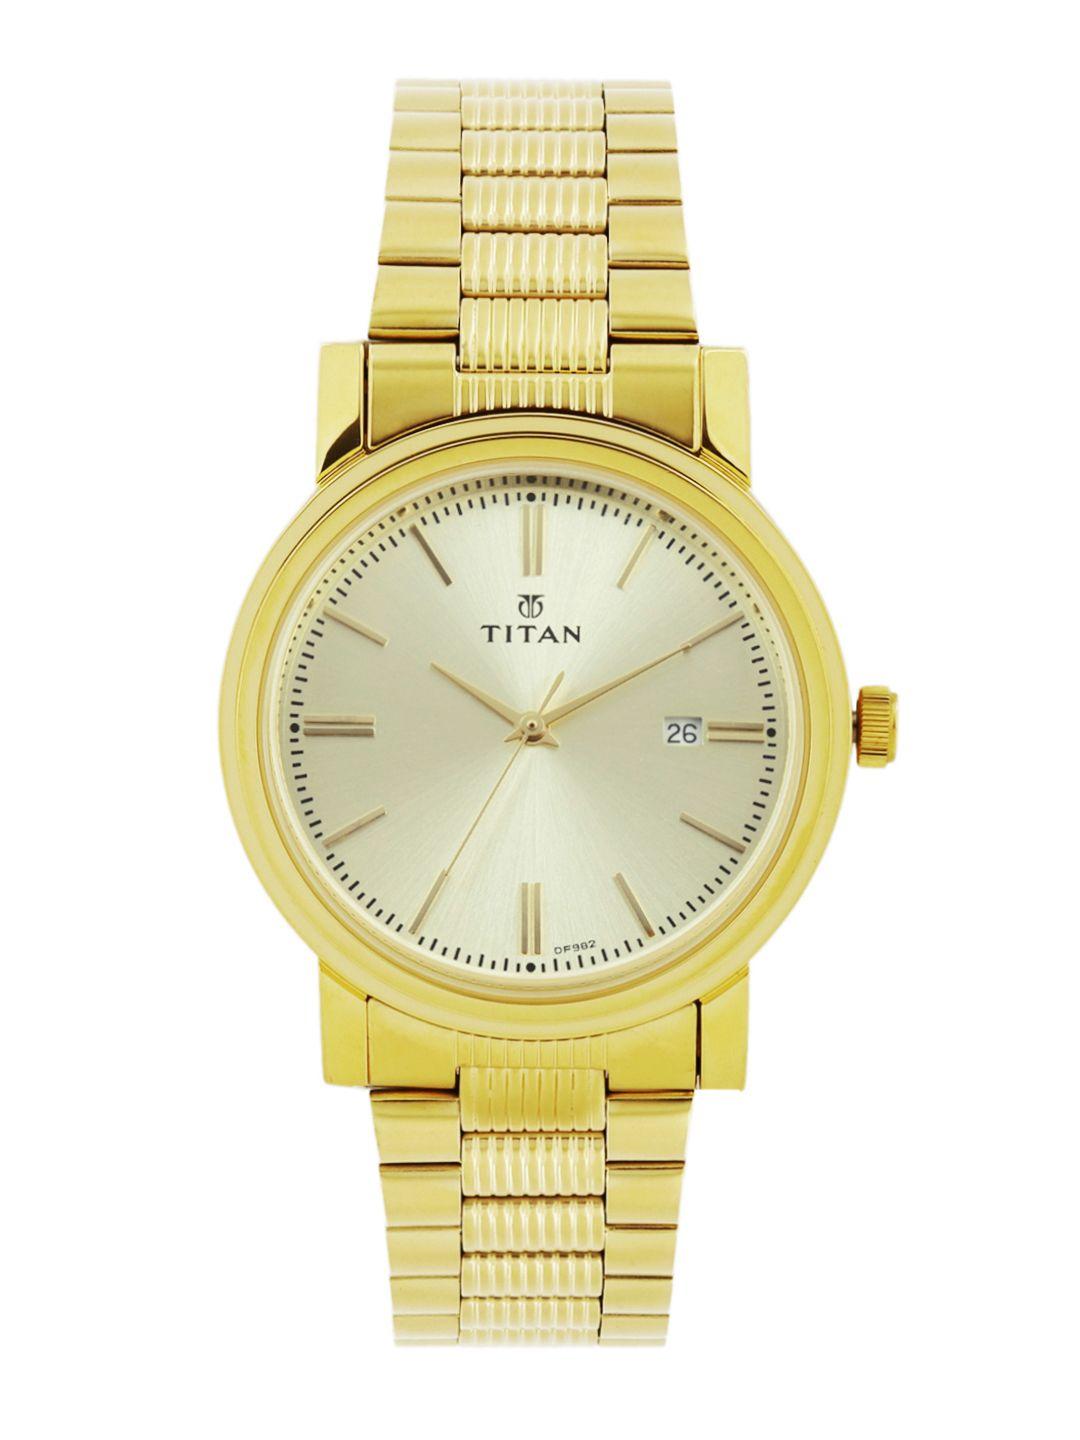 titan men gold-toned dial watch 1712ym03